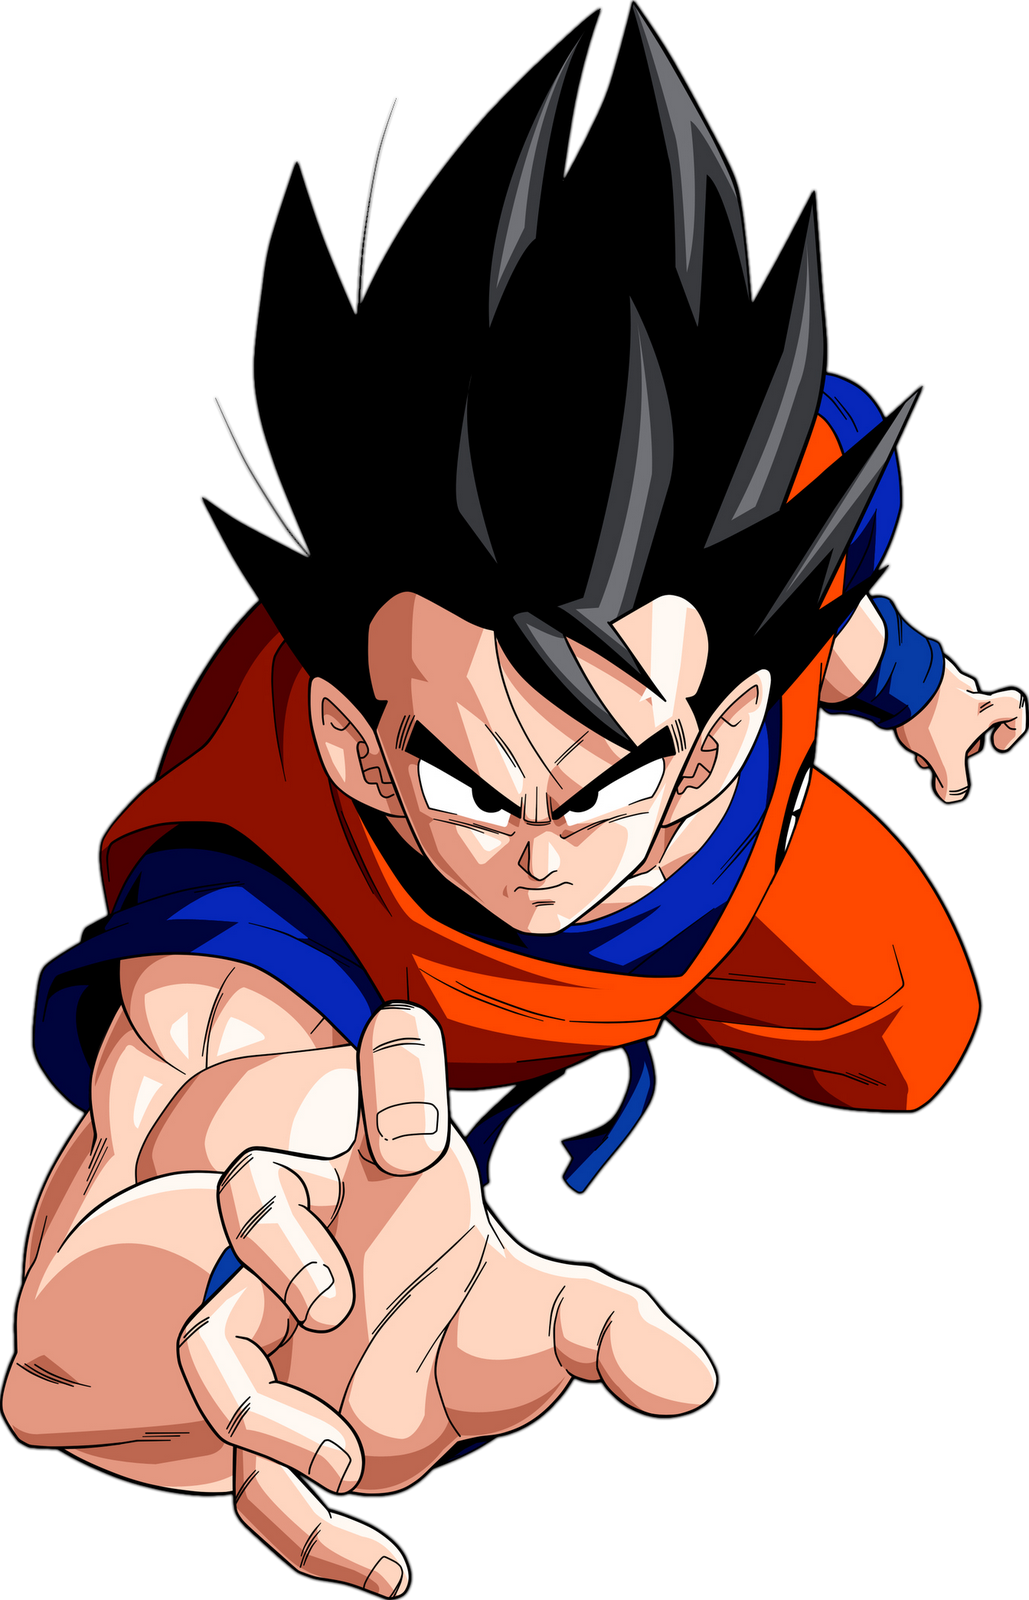 Dragon Ball Z Goku PNG imagen de alta calidad